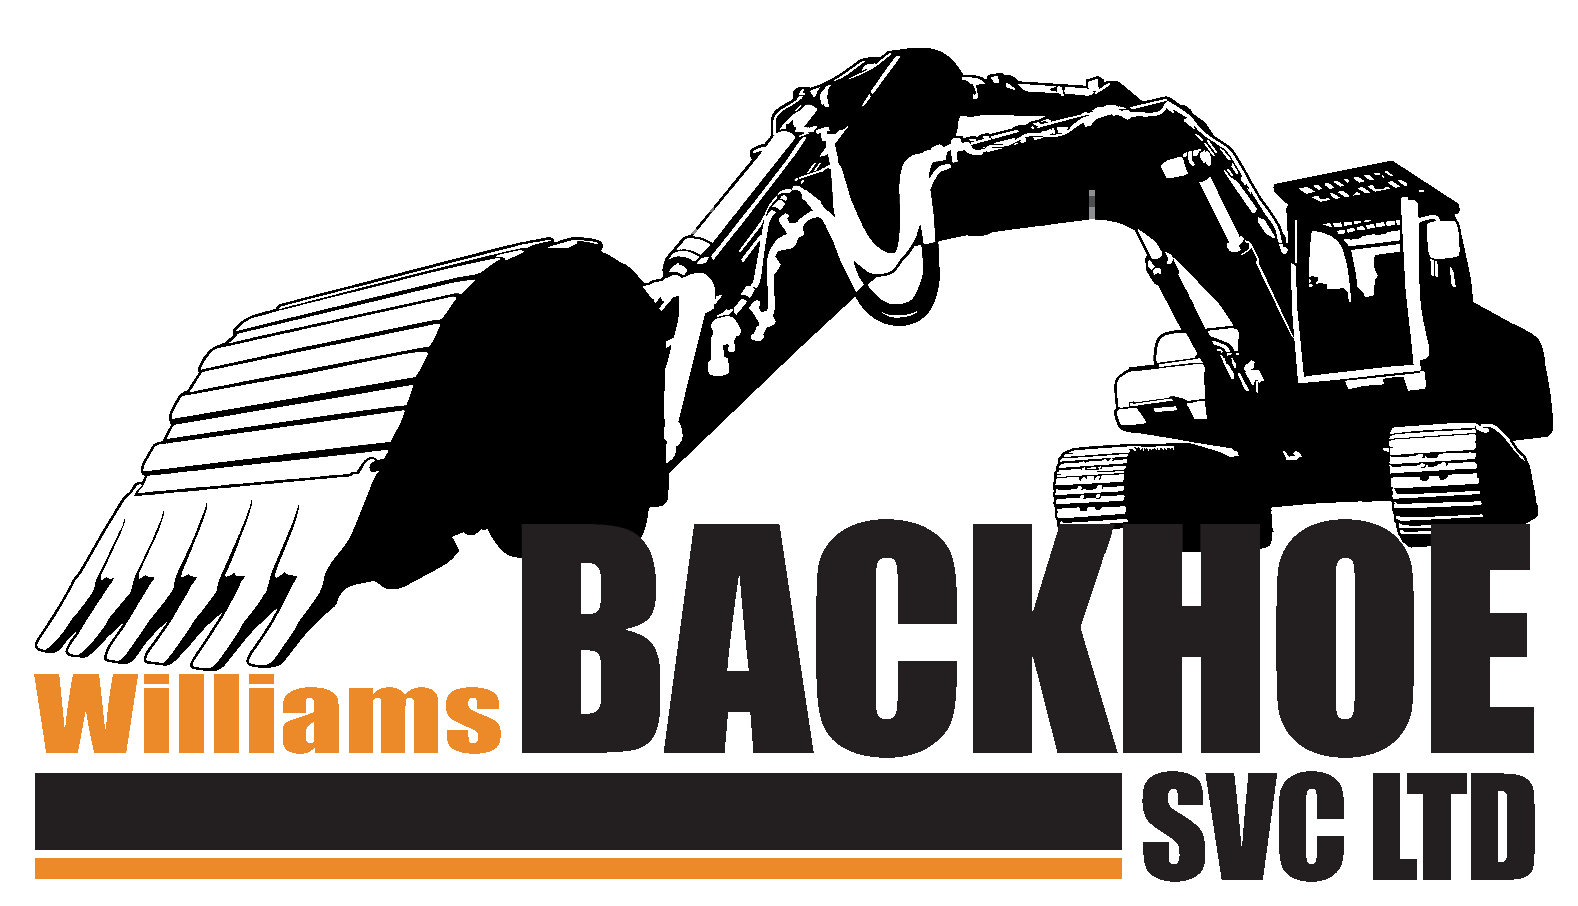 Williams Backhoe Services Ltd.